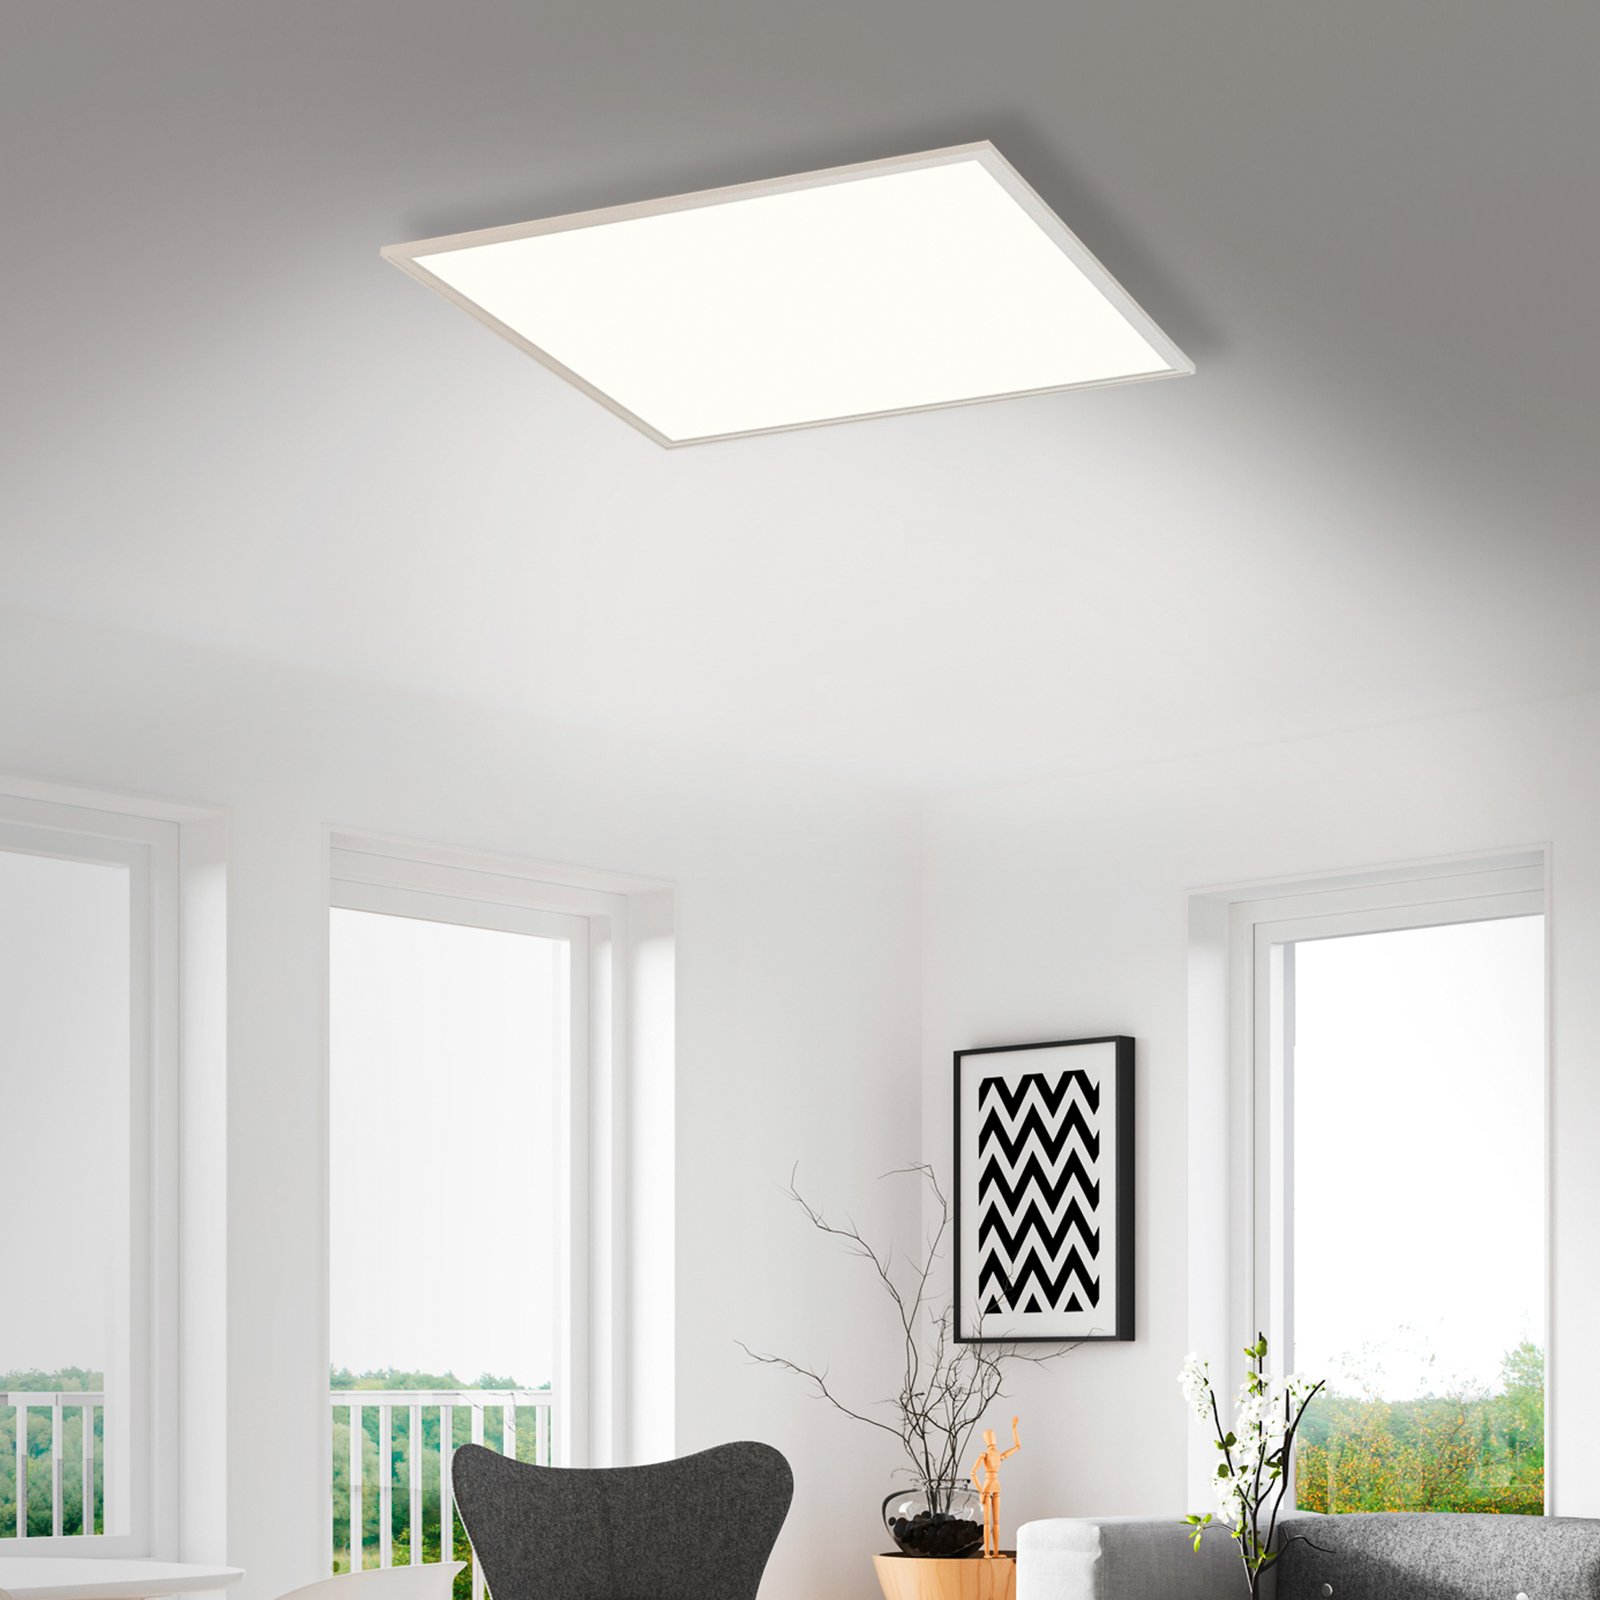 Simple LED panel white, ultra-flat, 59.5 x 59.5 cm